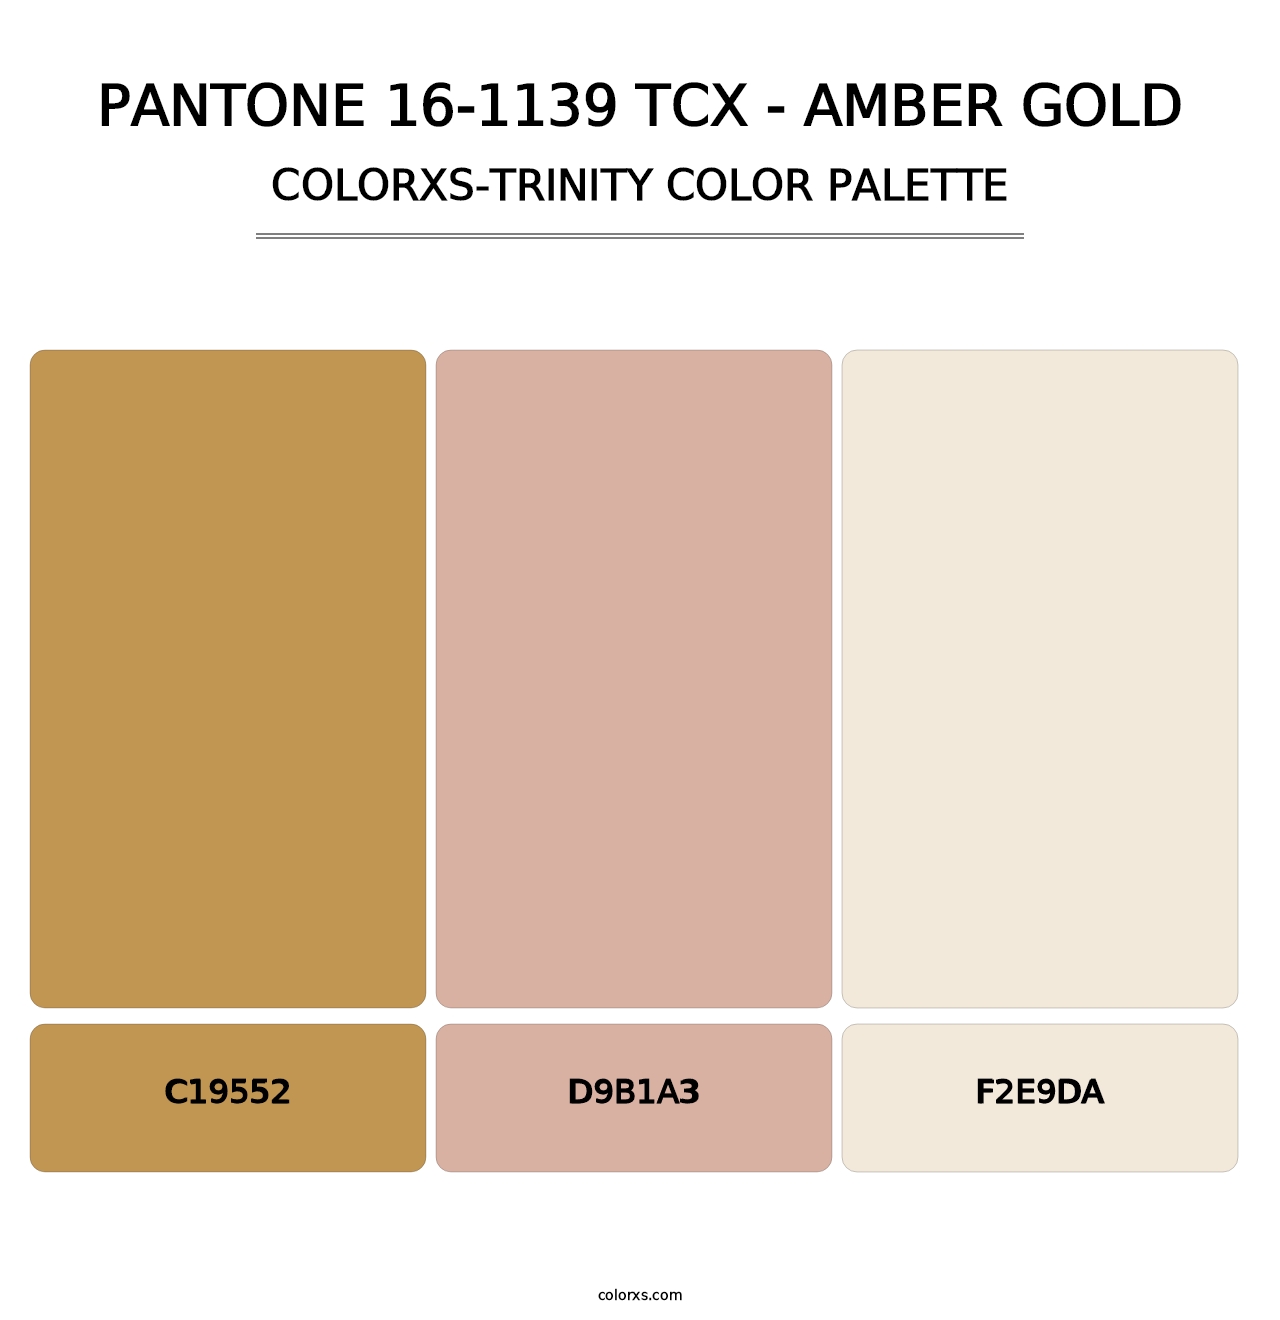 PANTONE 16-1139 TCX - Amber Gold - Colorxs Trinity Palette